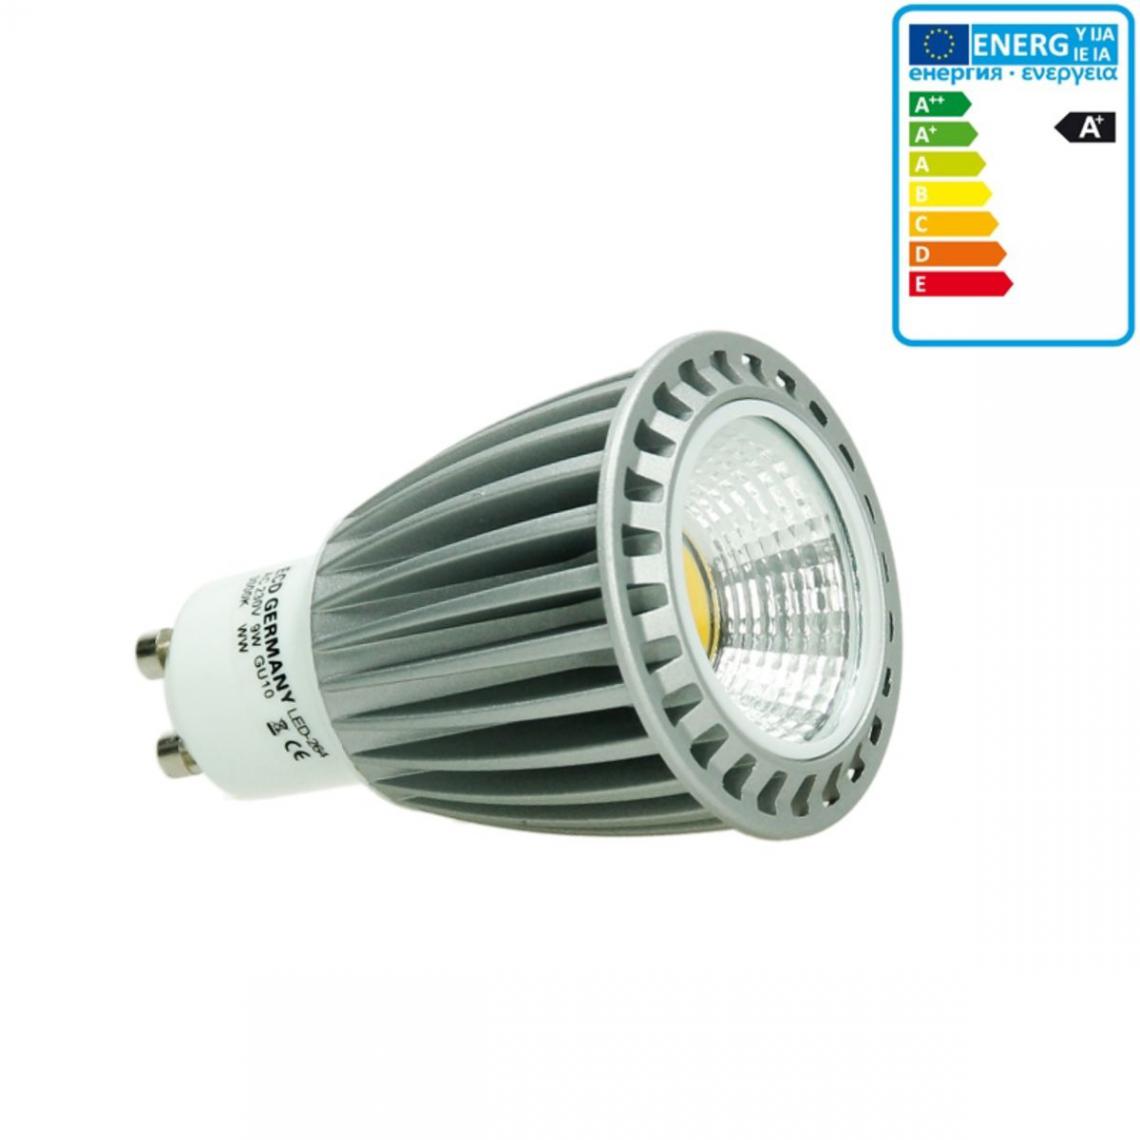 Ecd Germany - ECD Germany LED COB GU10 Spot Lampe Ampoule 9W Blanc Chaud - Ampoules LED